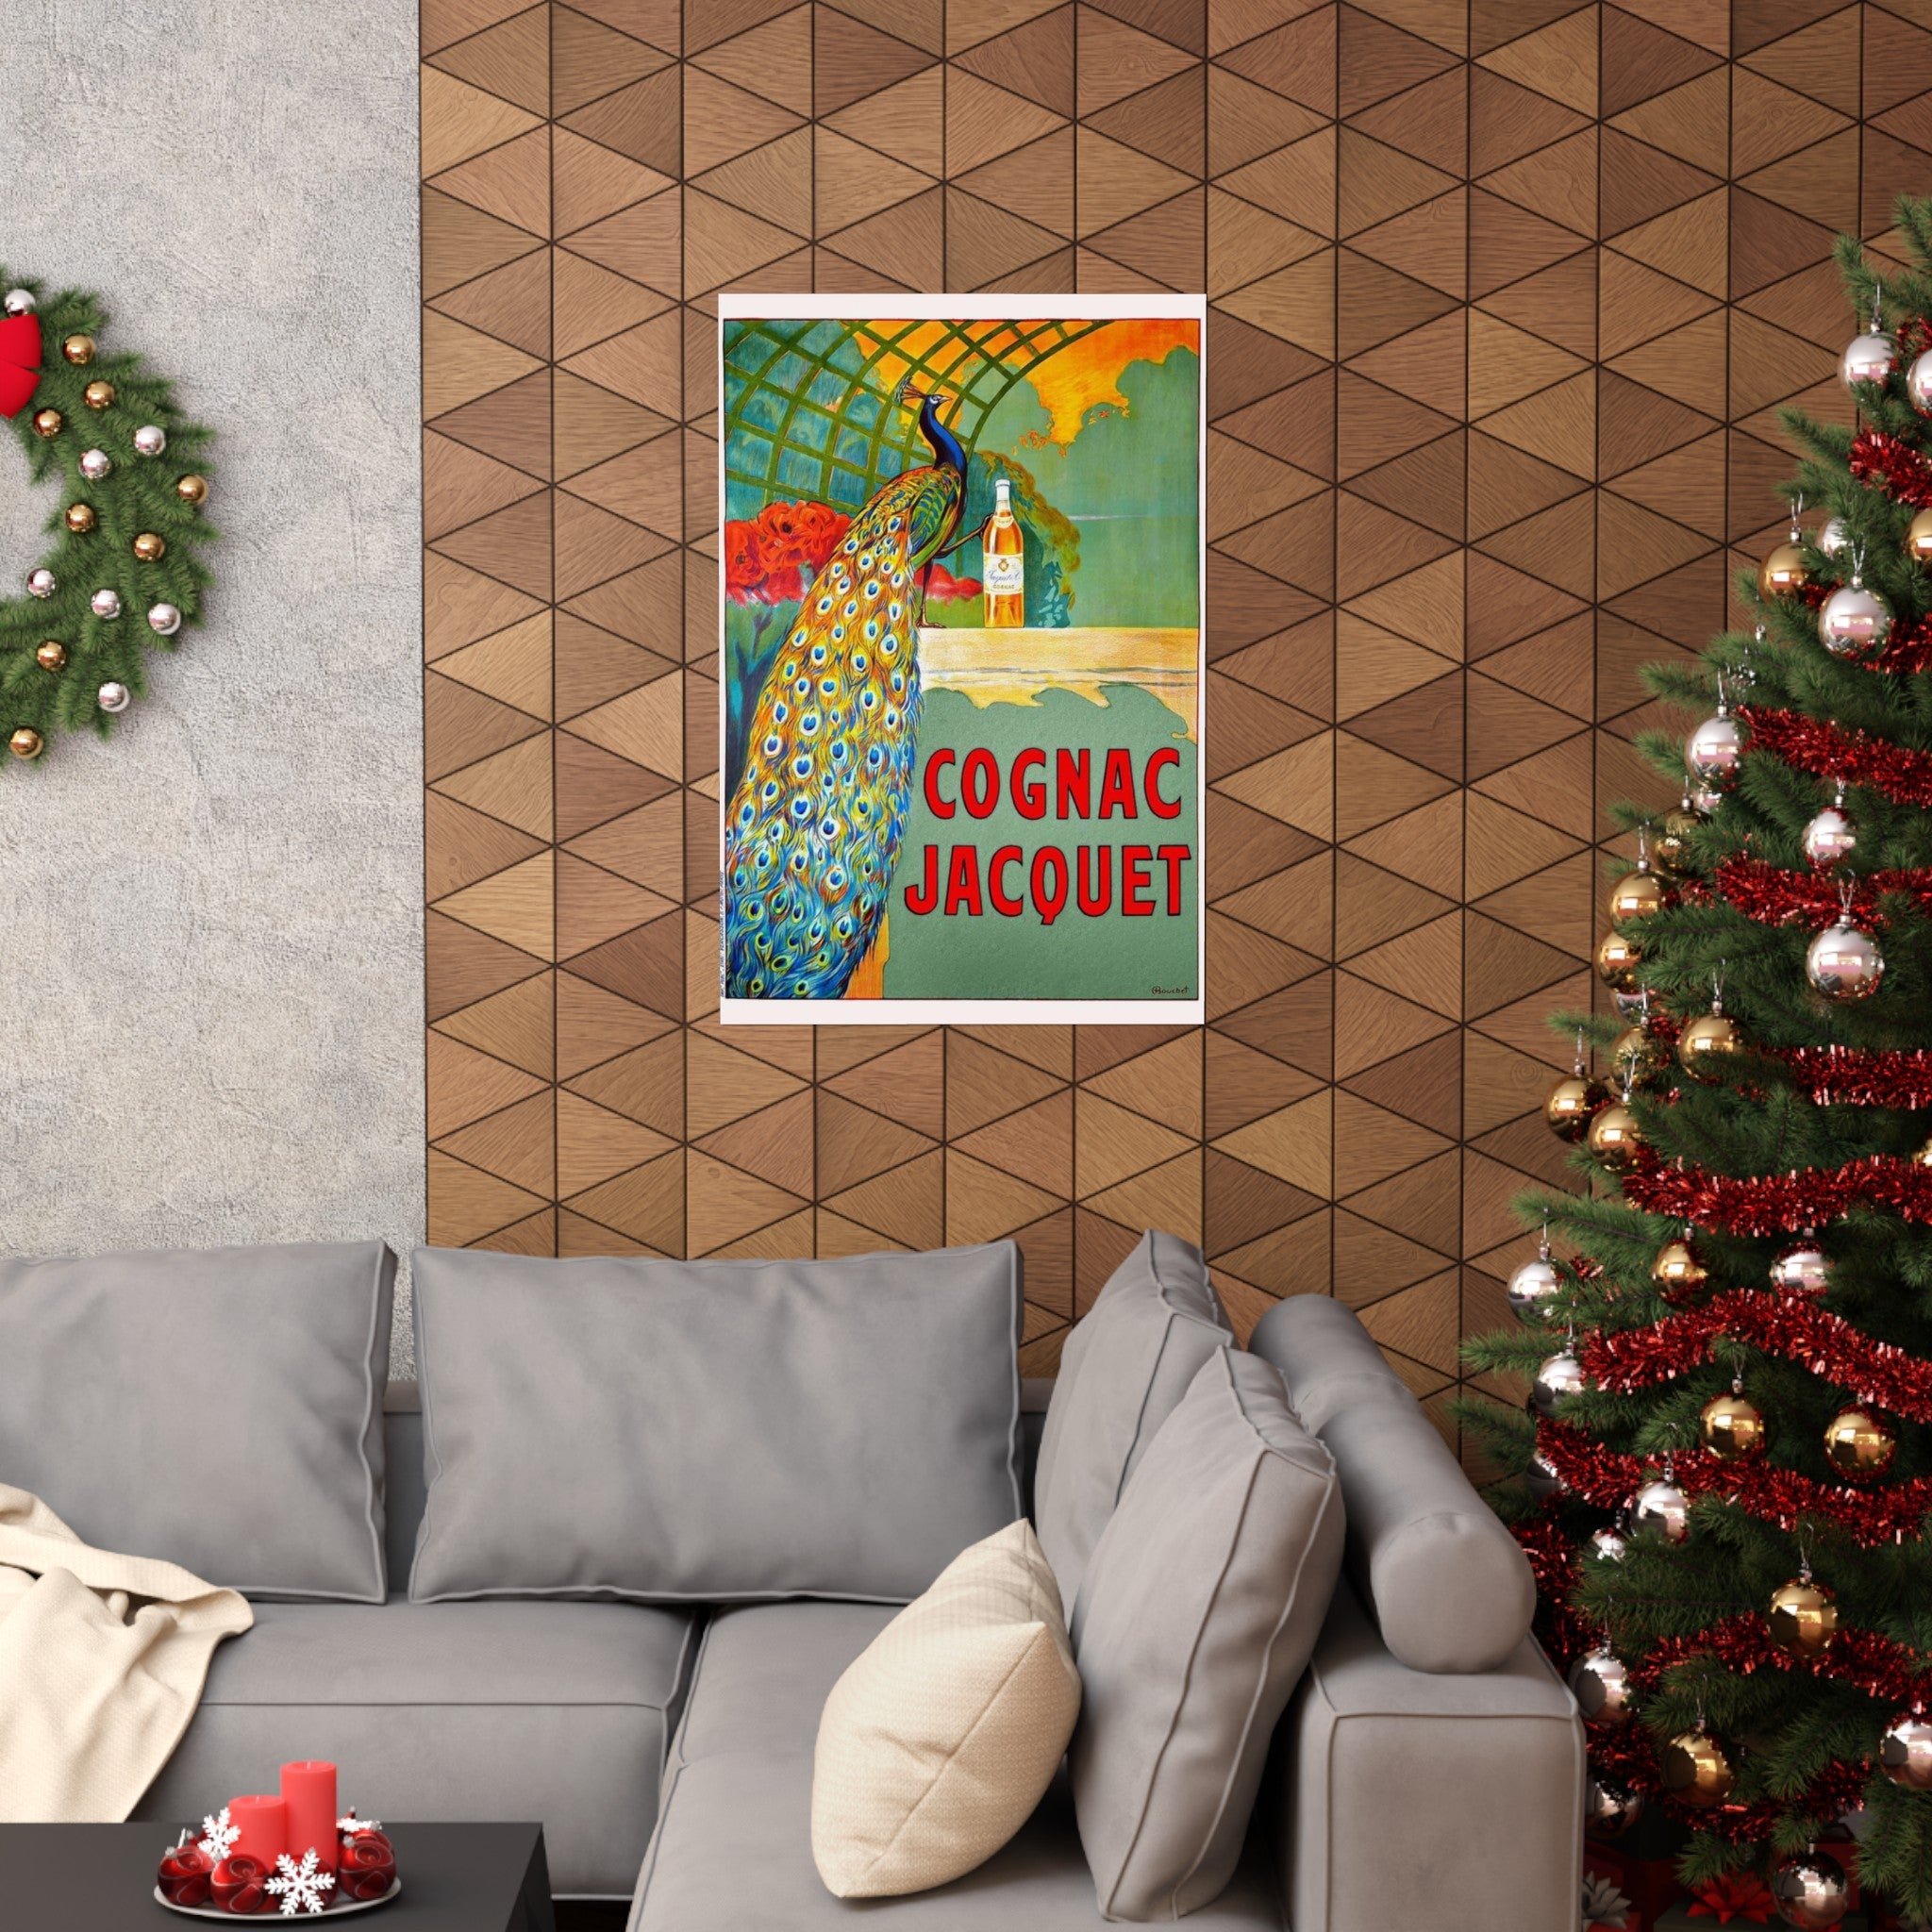 Cognac Jacquet Wall Print | Retro Advertising Print | Alcohol